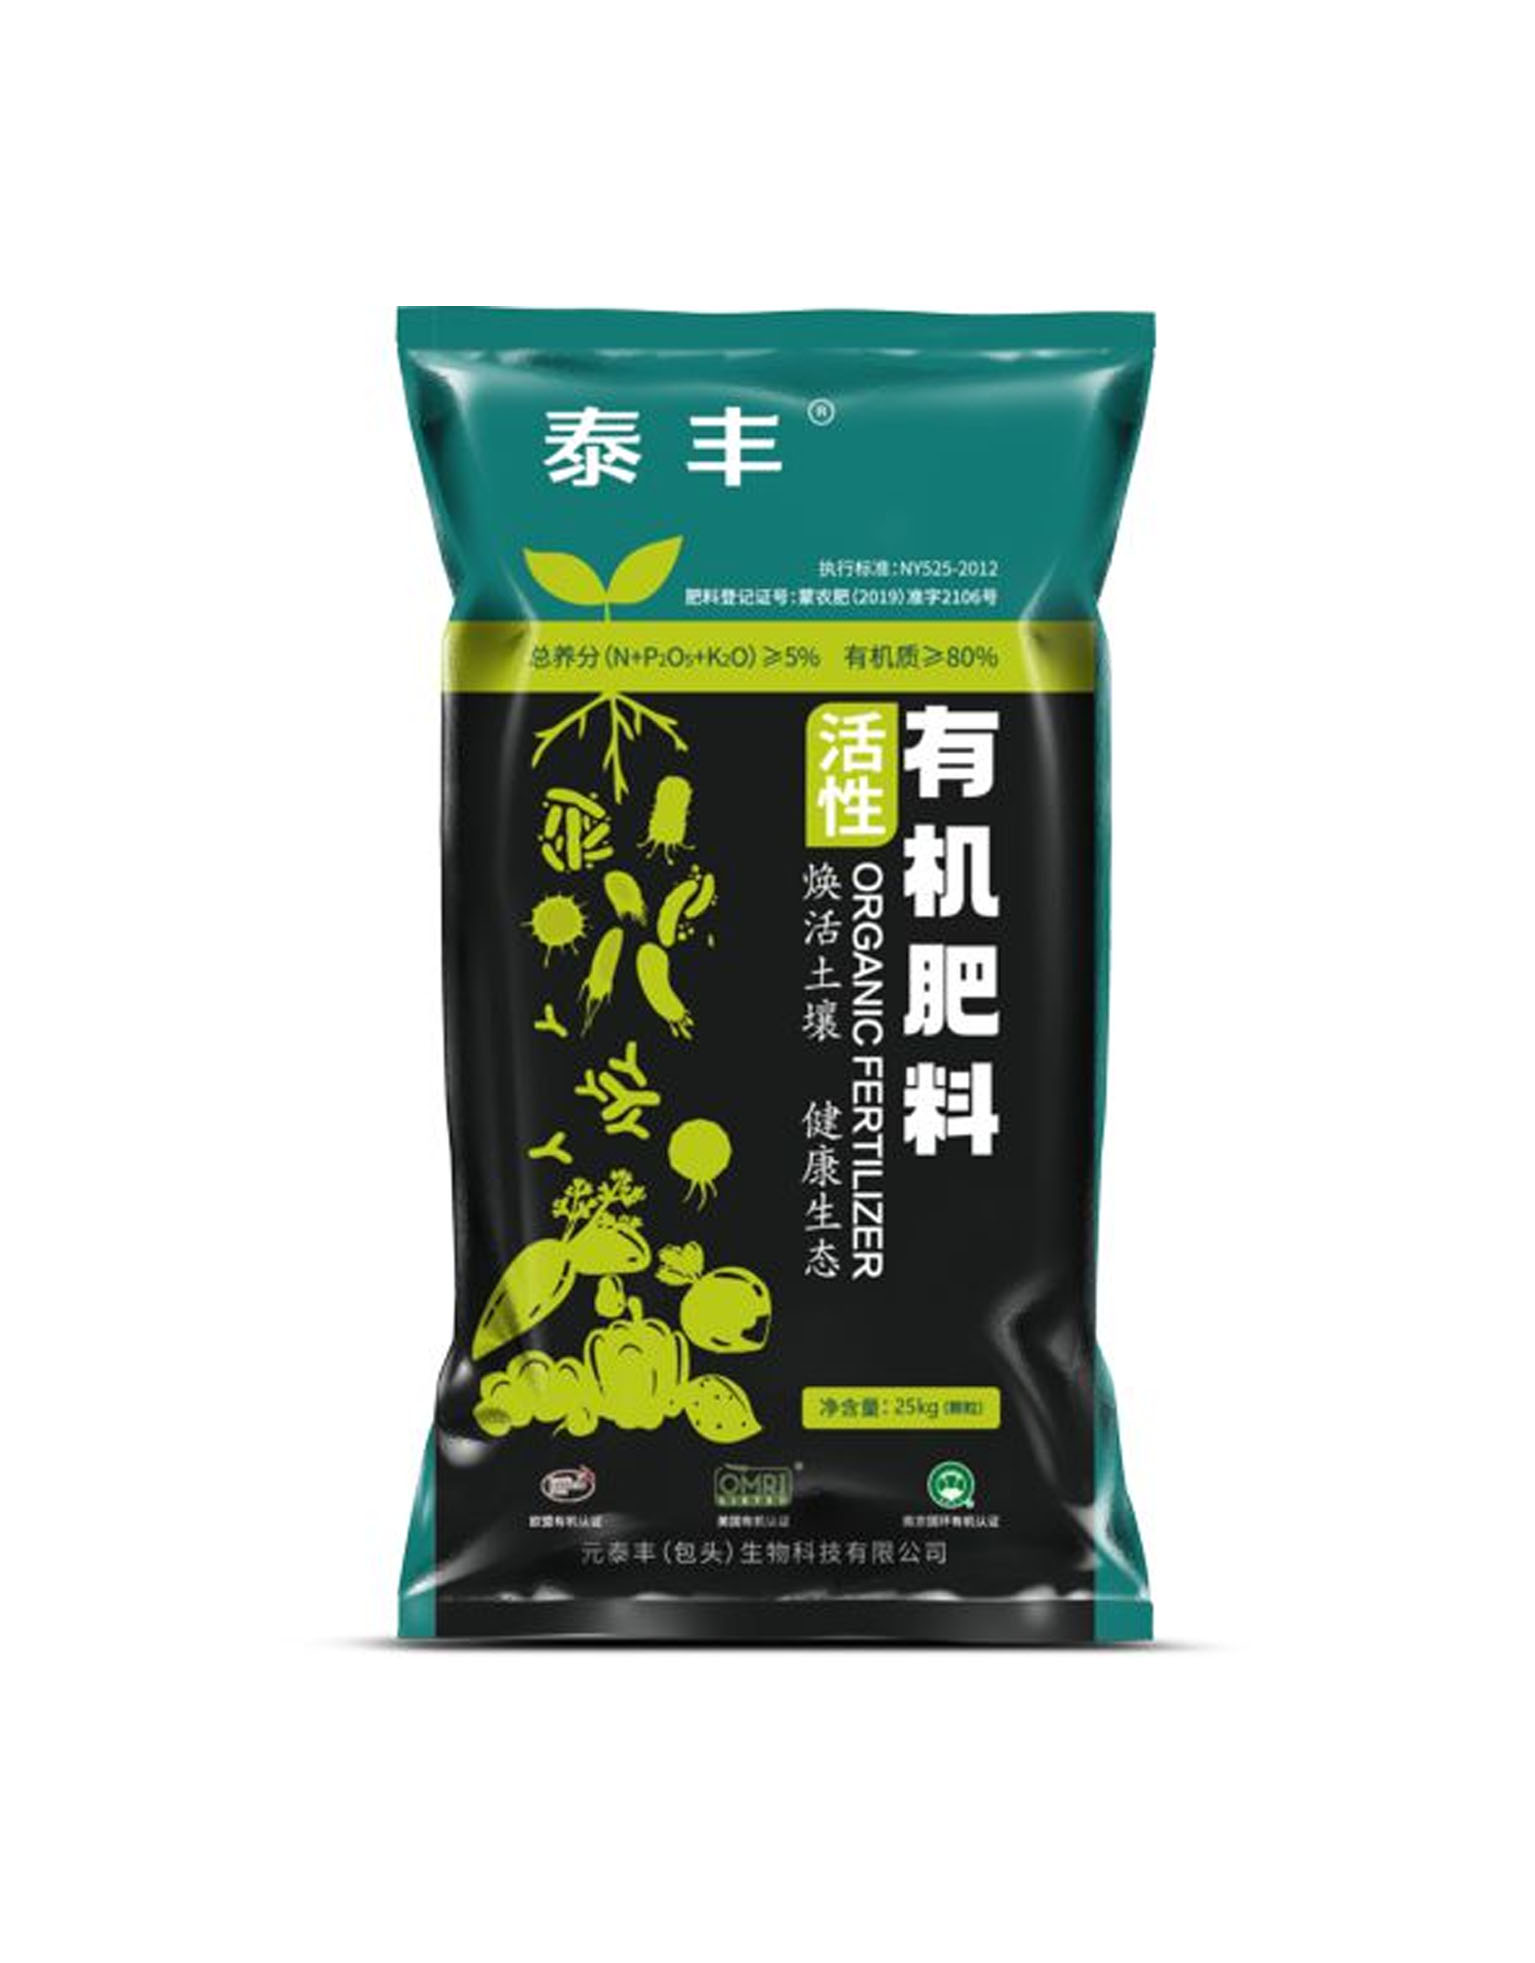 Taifeng active organic fertilizer